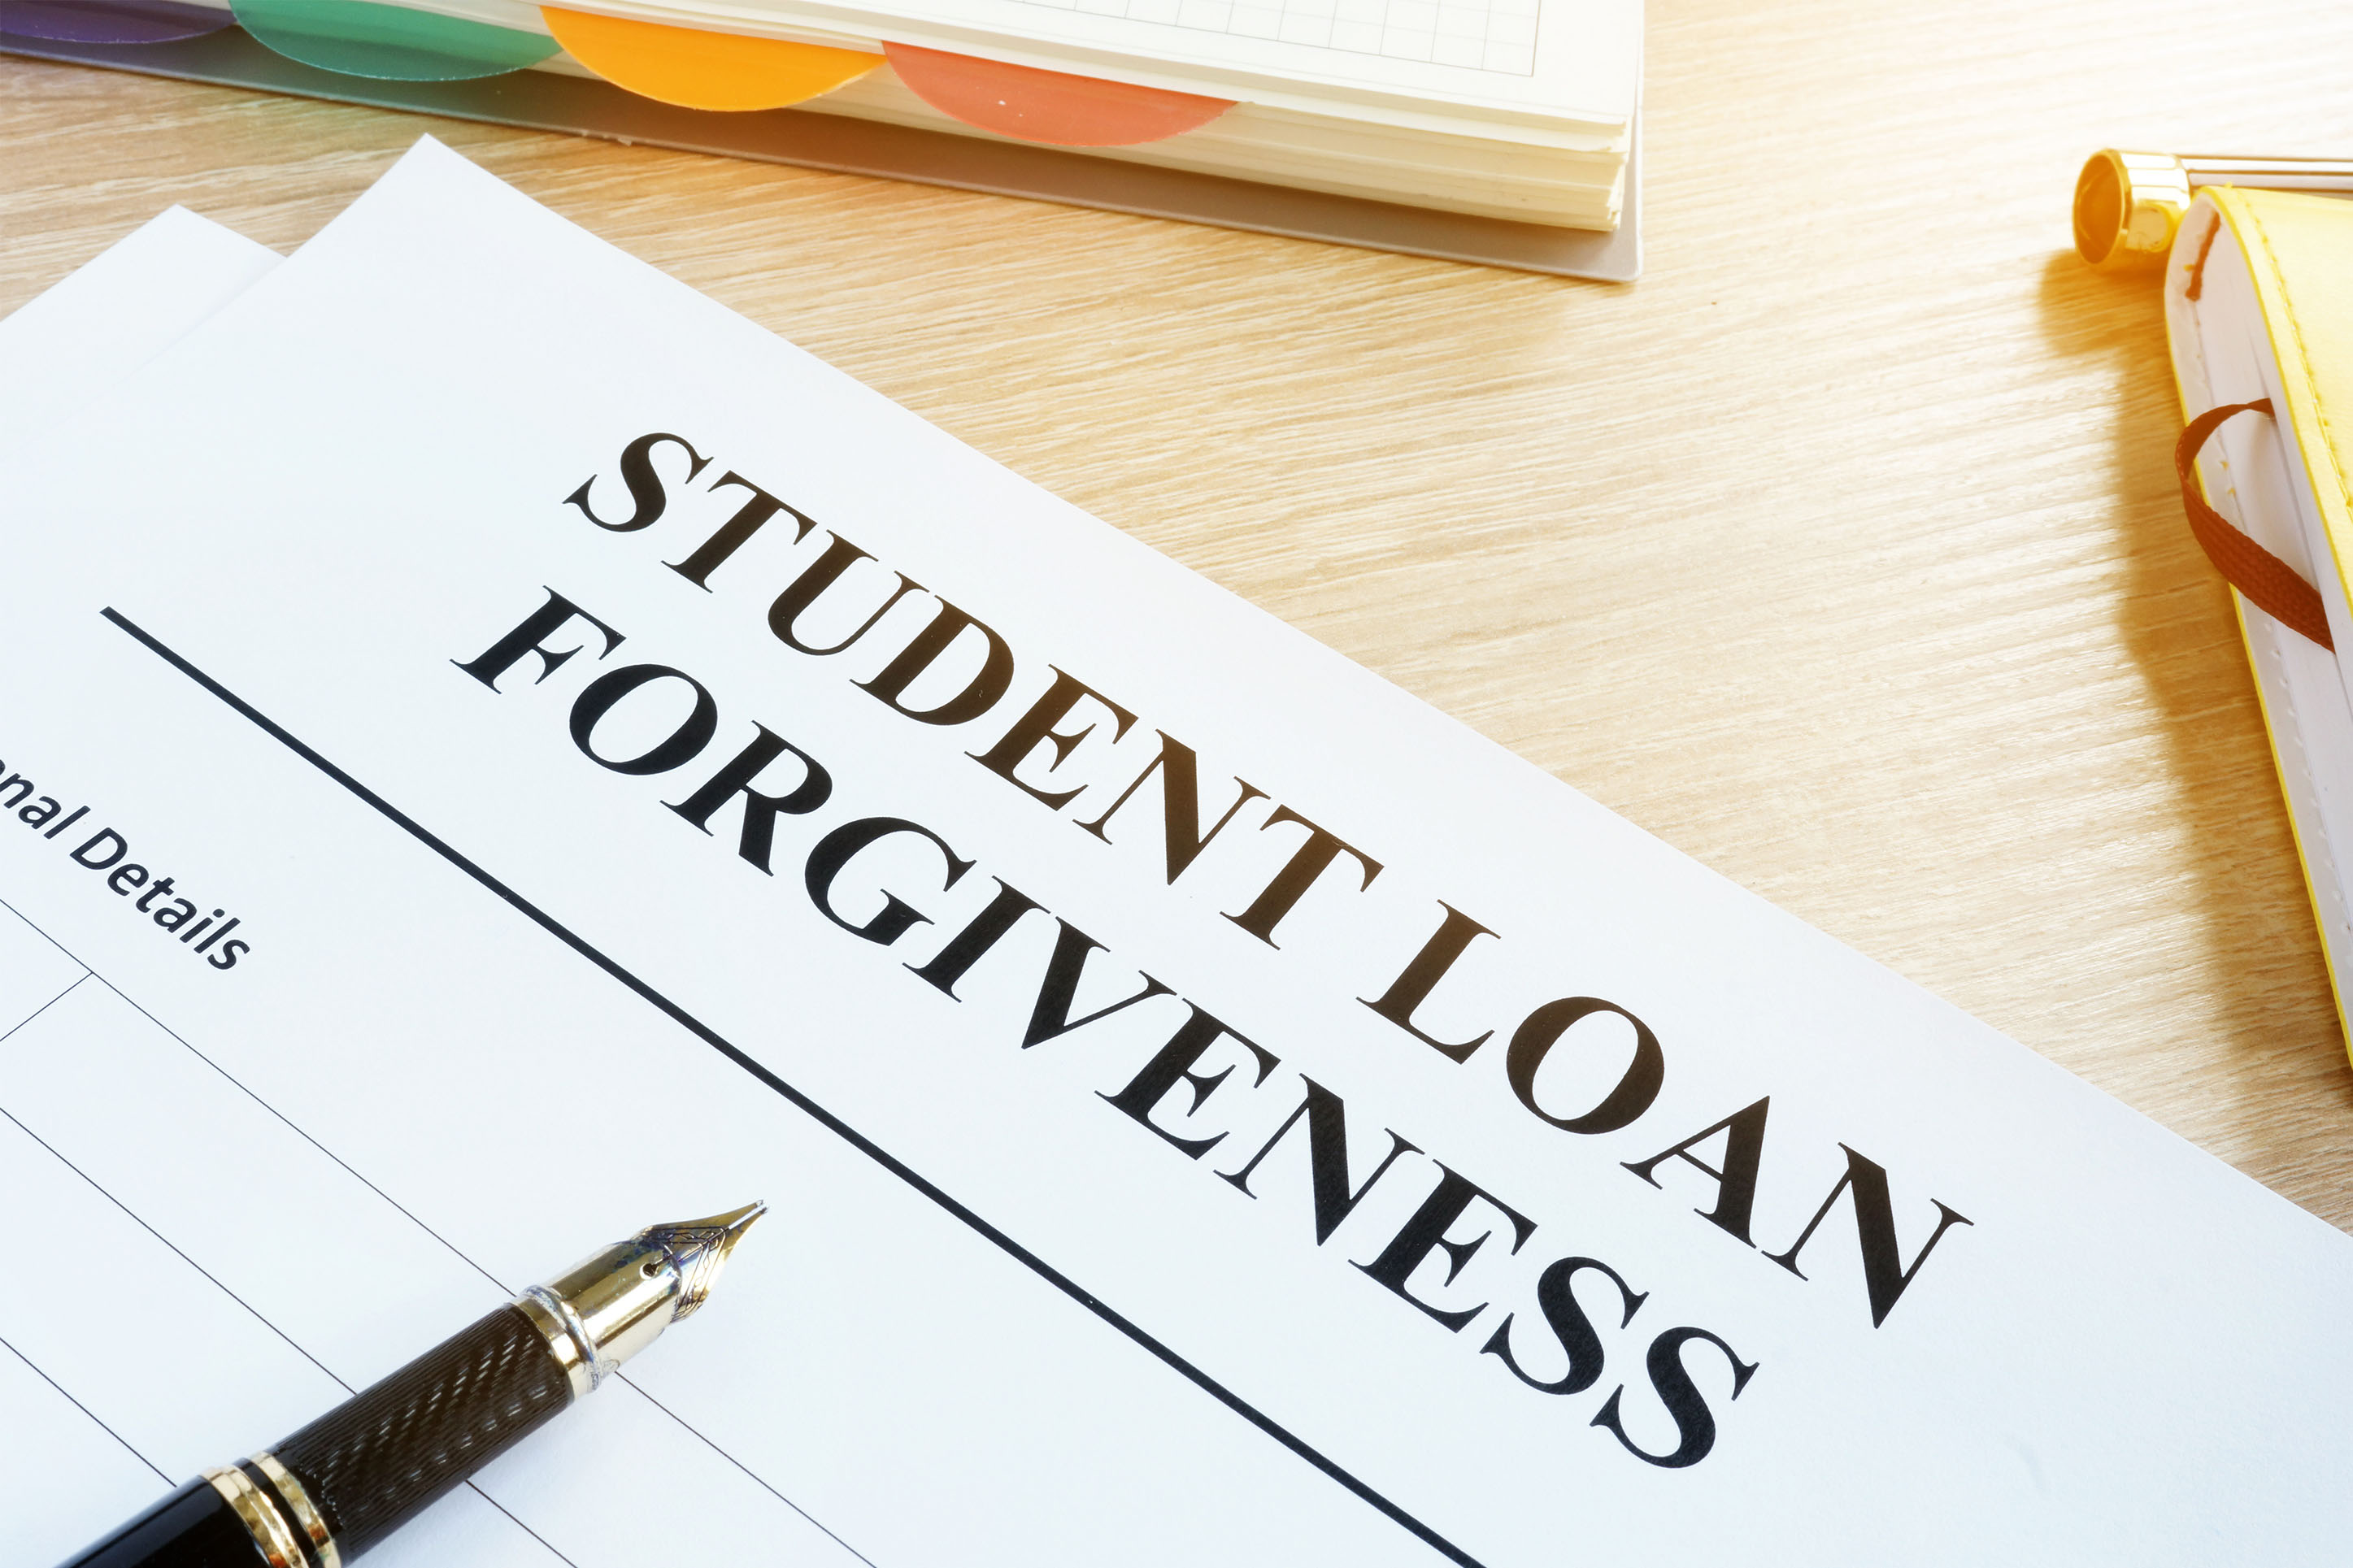 Student Loan Forgiveness 